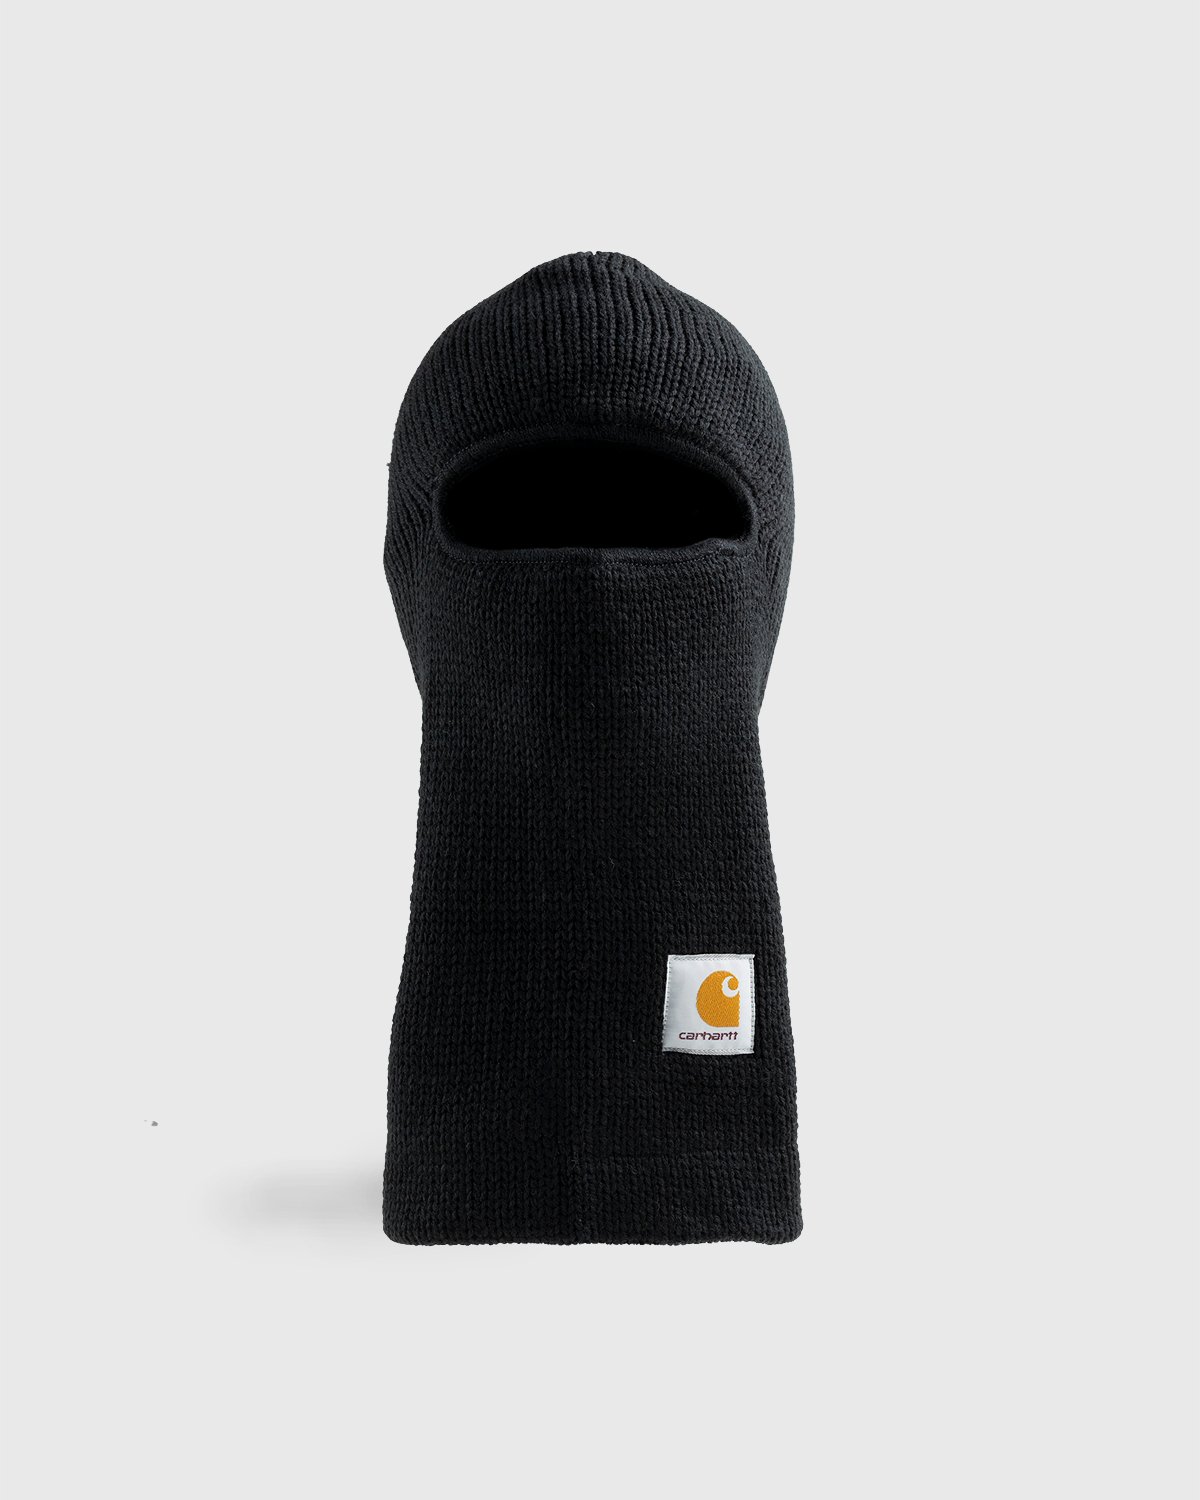 Carhartt WIP - Storm Mask Black - Accessories - Black - Image 1